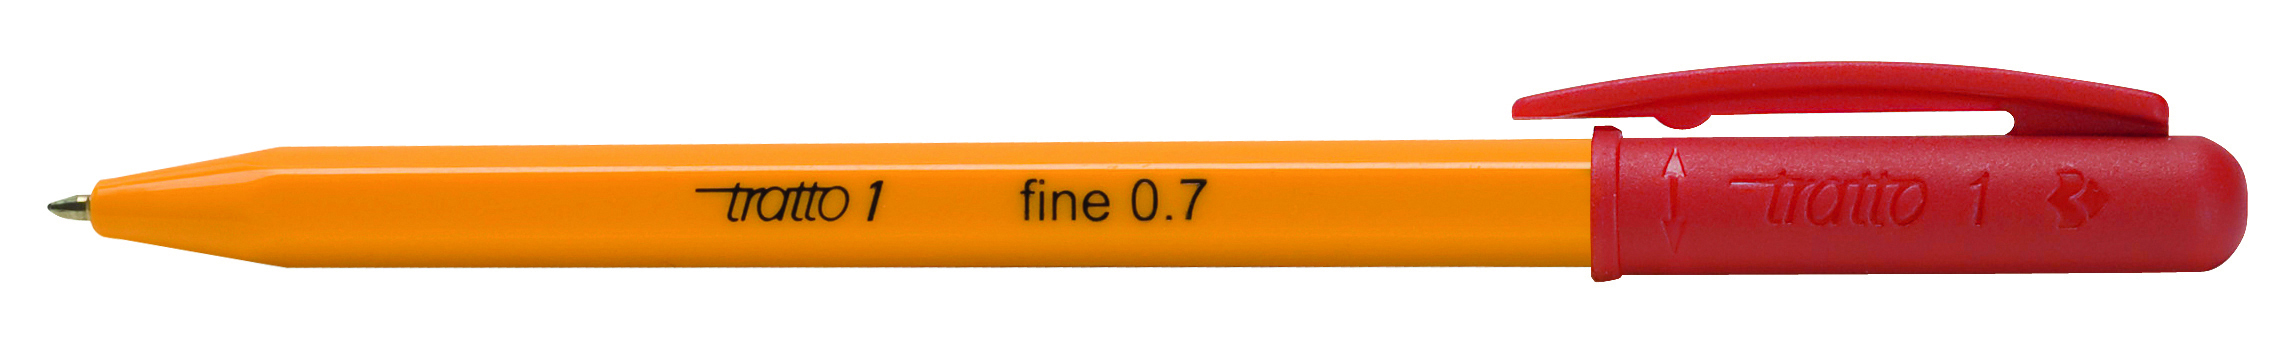 Ручка шариковая красная Tratto 1 поворот 0.7мм желтый корпус